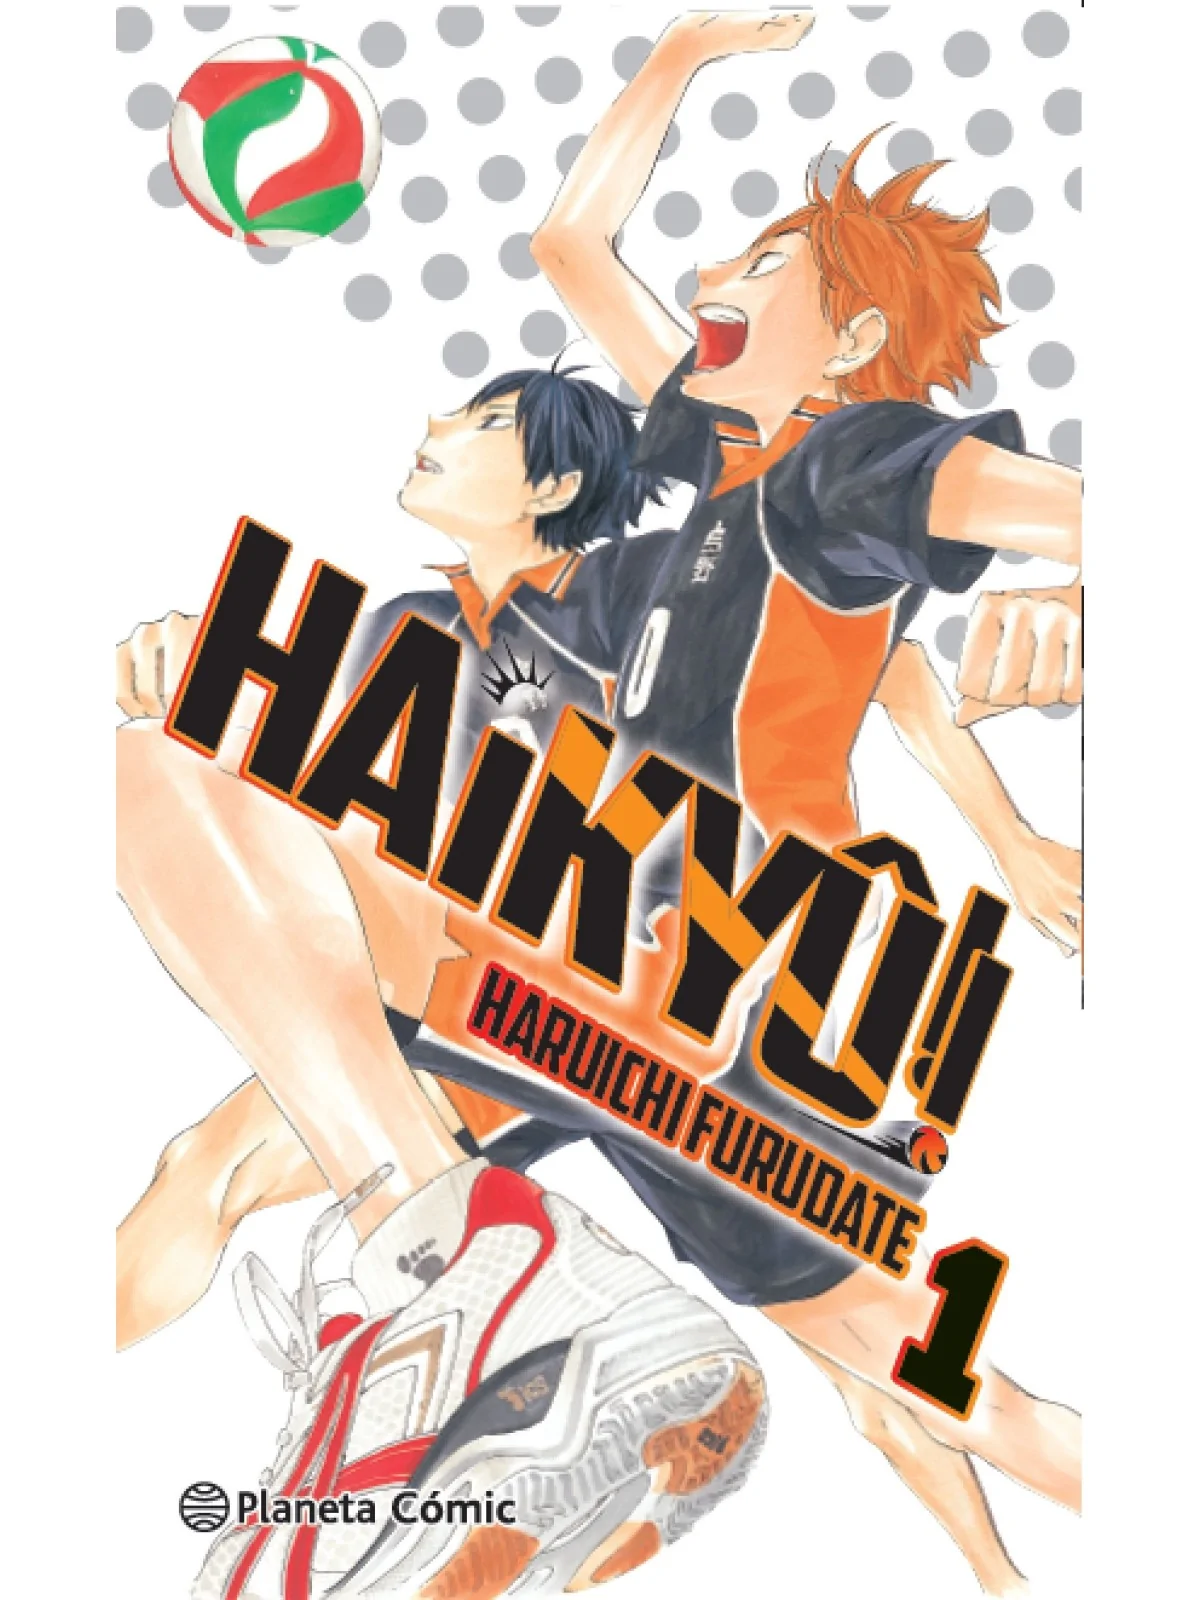 Comprar 1.haikyu!!.(Manga shonen) barato al mejor precio 8,07 € de Pla